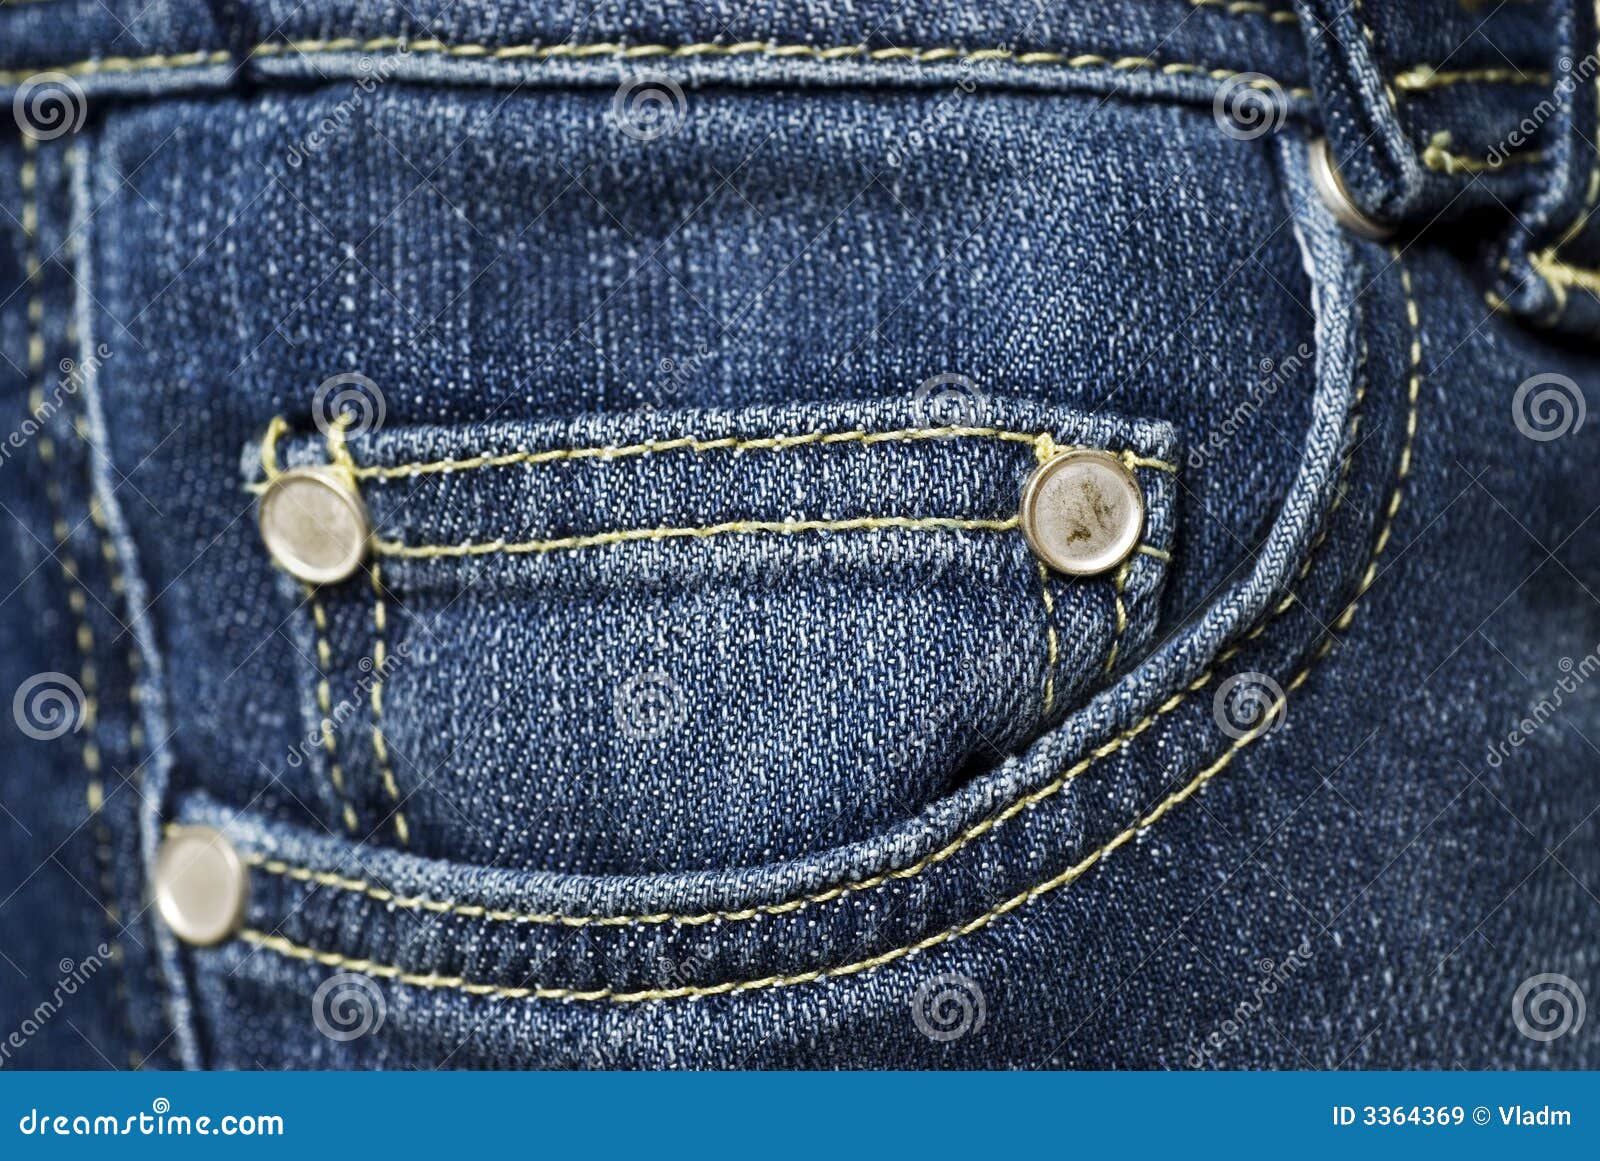 jeans-pocket-3364369.jpg